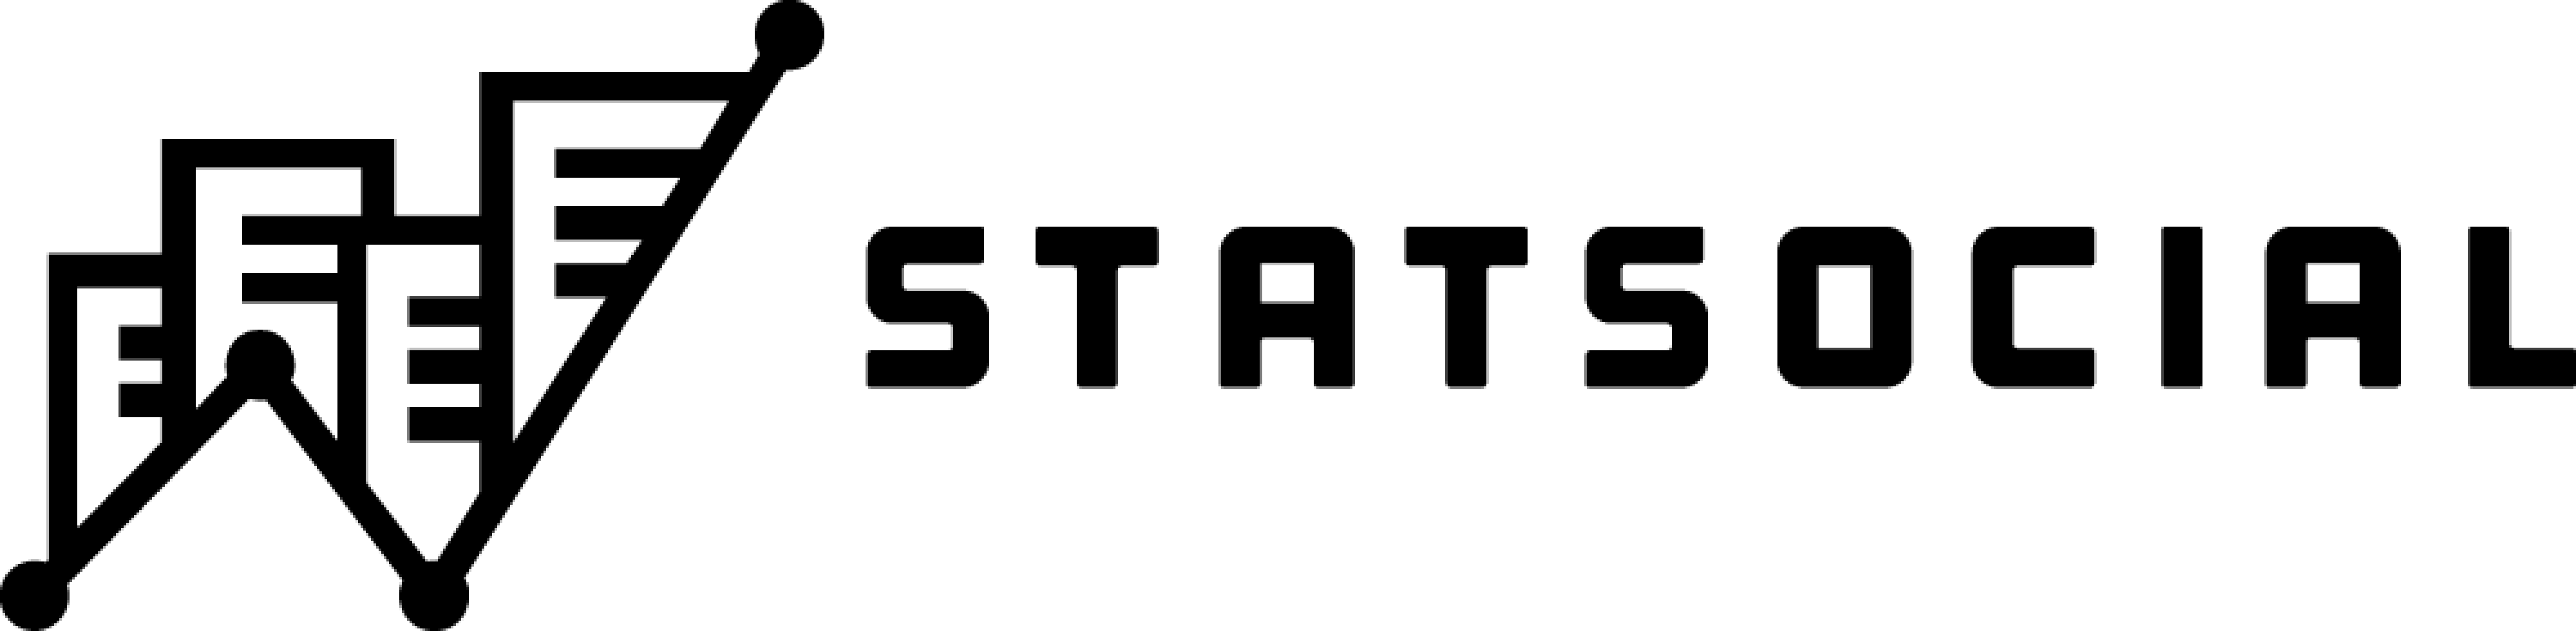 StatSocial Logo